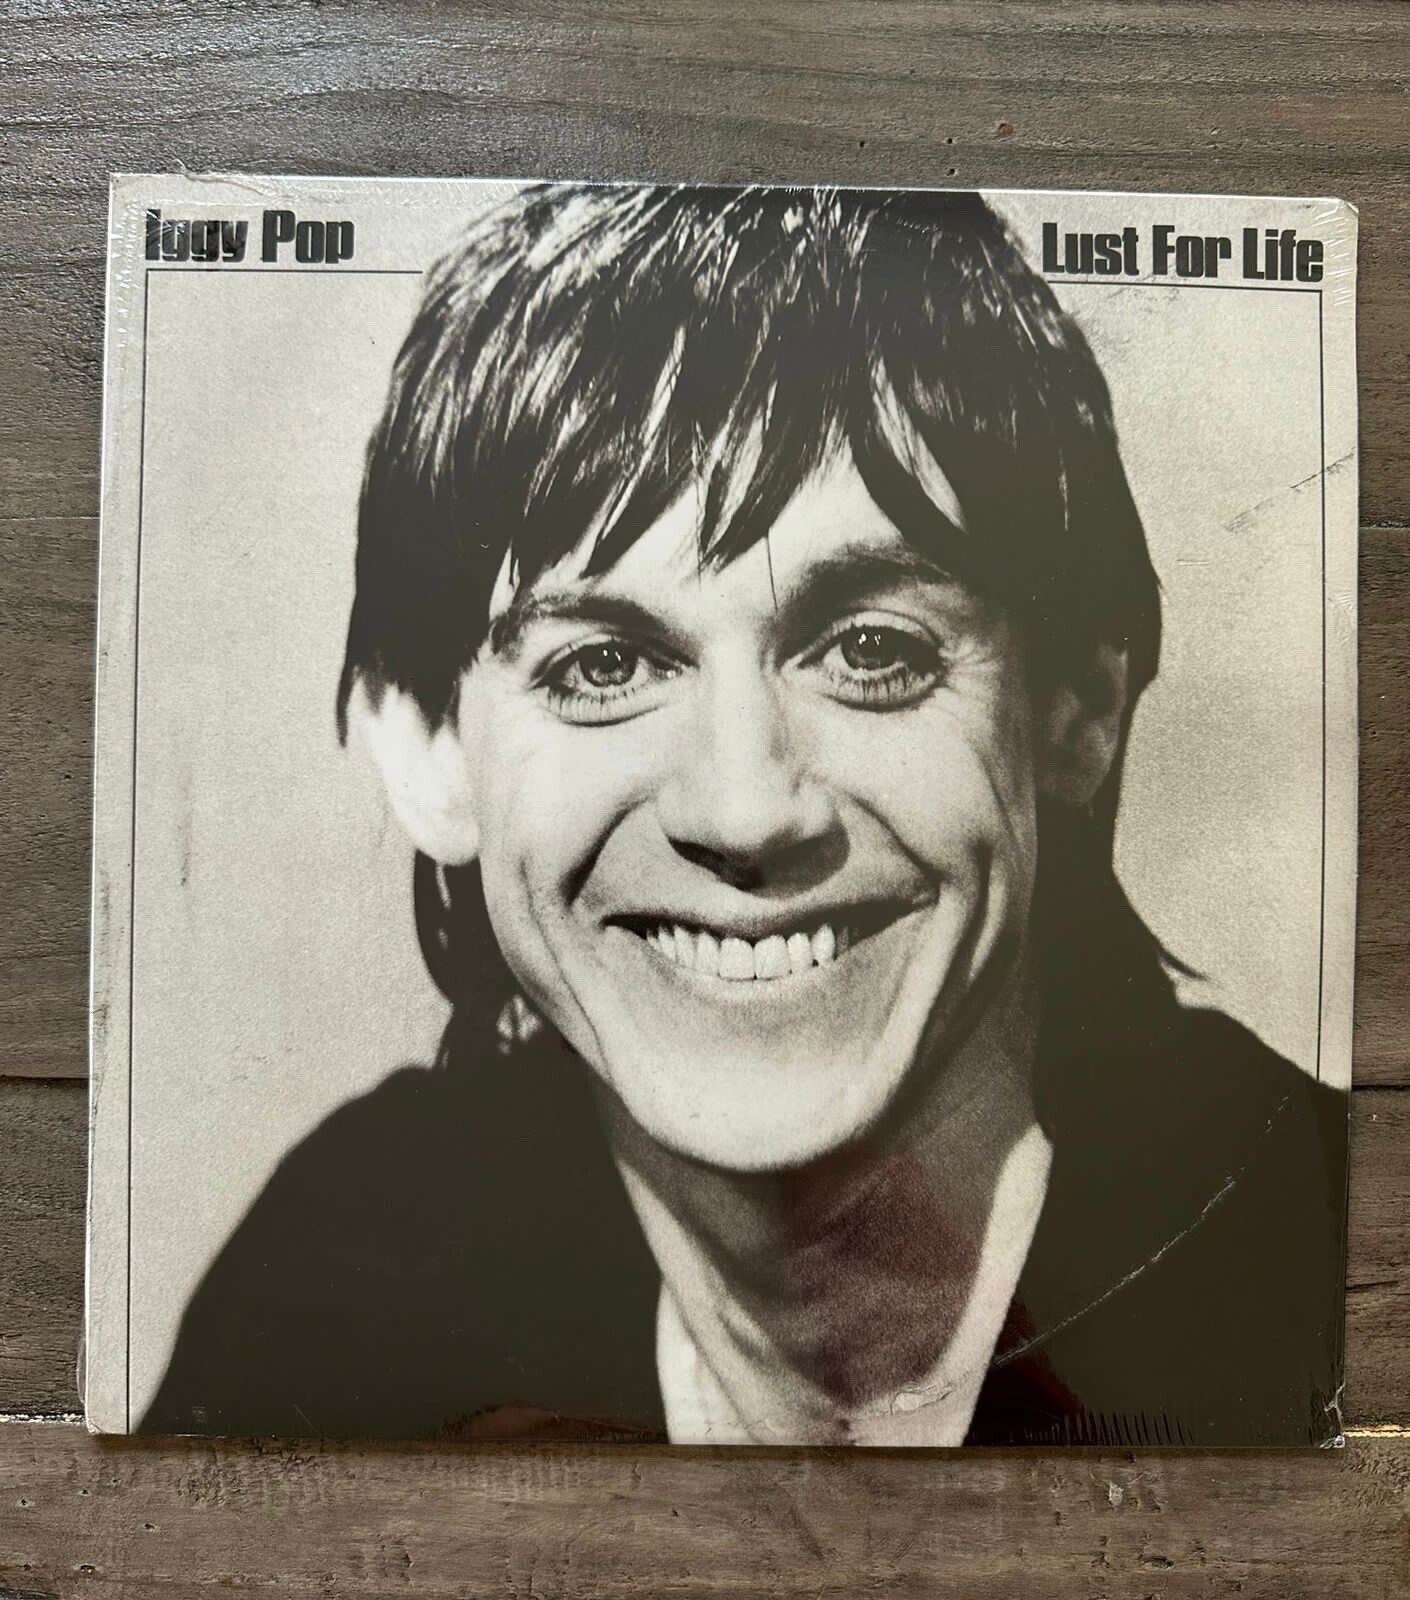 Iggy Pop – Lust For Life (Damage Sleeve) Vinyl